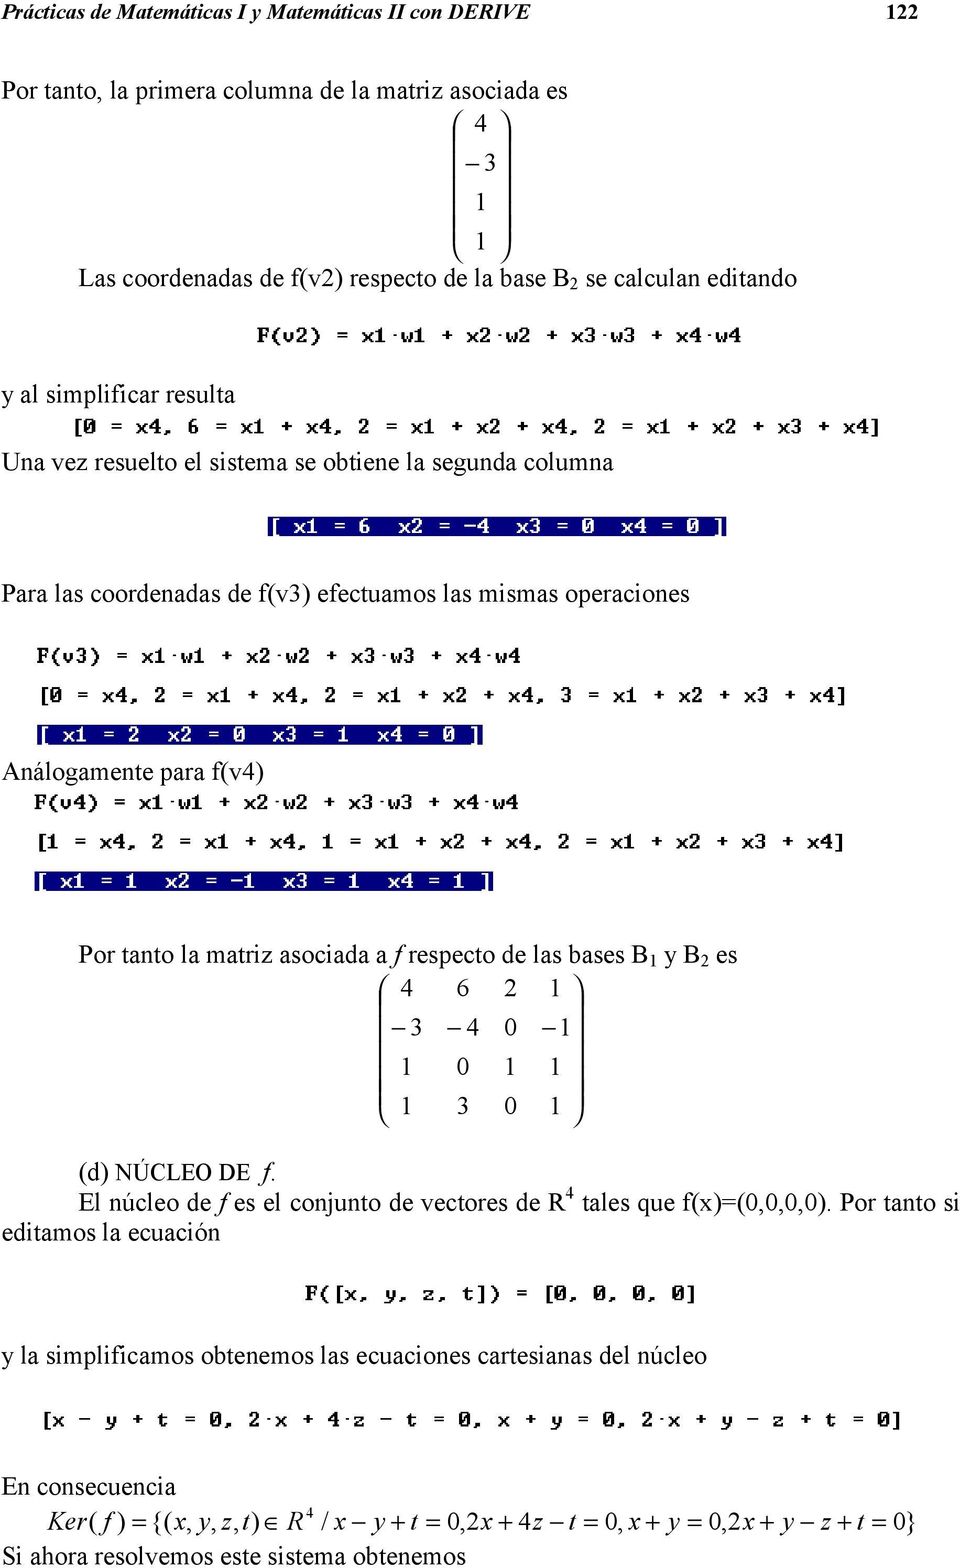 asociada a f respecto de las bases B y B 2 es 0 3 0 0 3 2 6 (d) NÚCLEO DE f. El núcleo de f es el conjunto de vectores de R tales que f(x)=(0,0,0,0).